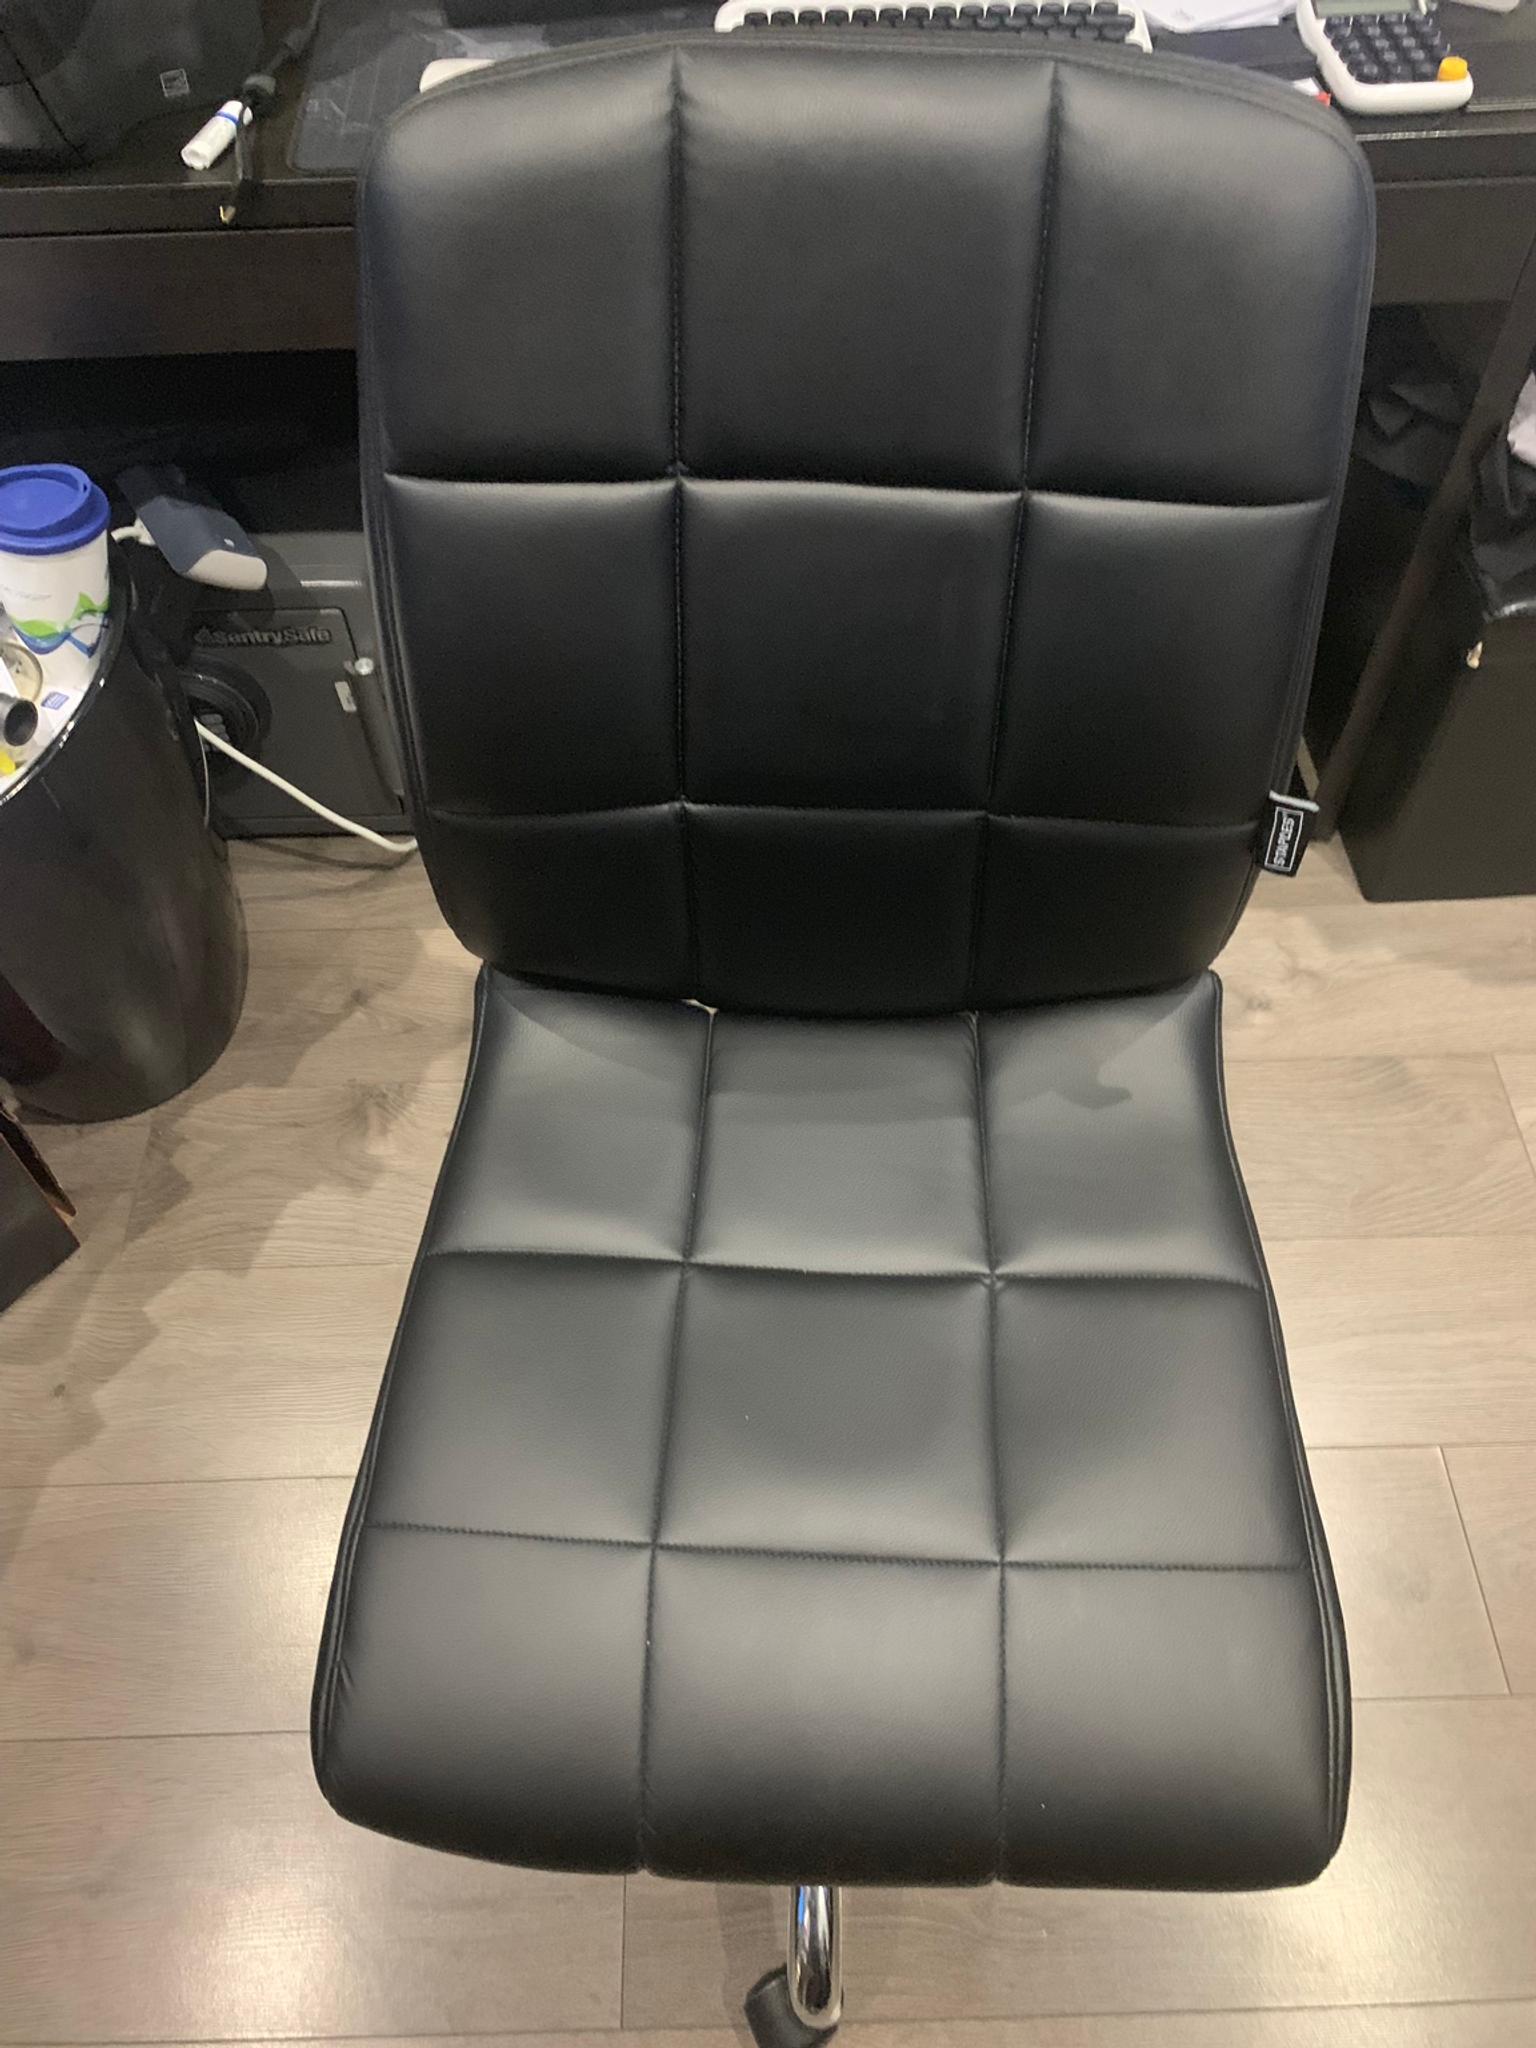 Staples Black Office Chair Like New In E6 London For 25 00 For